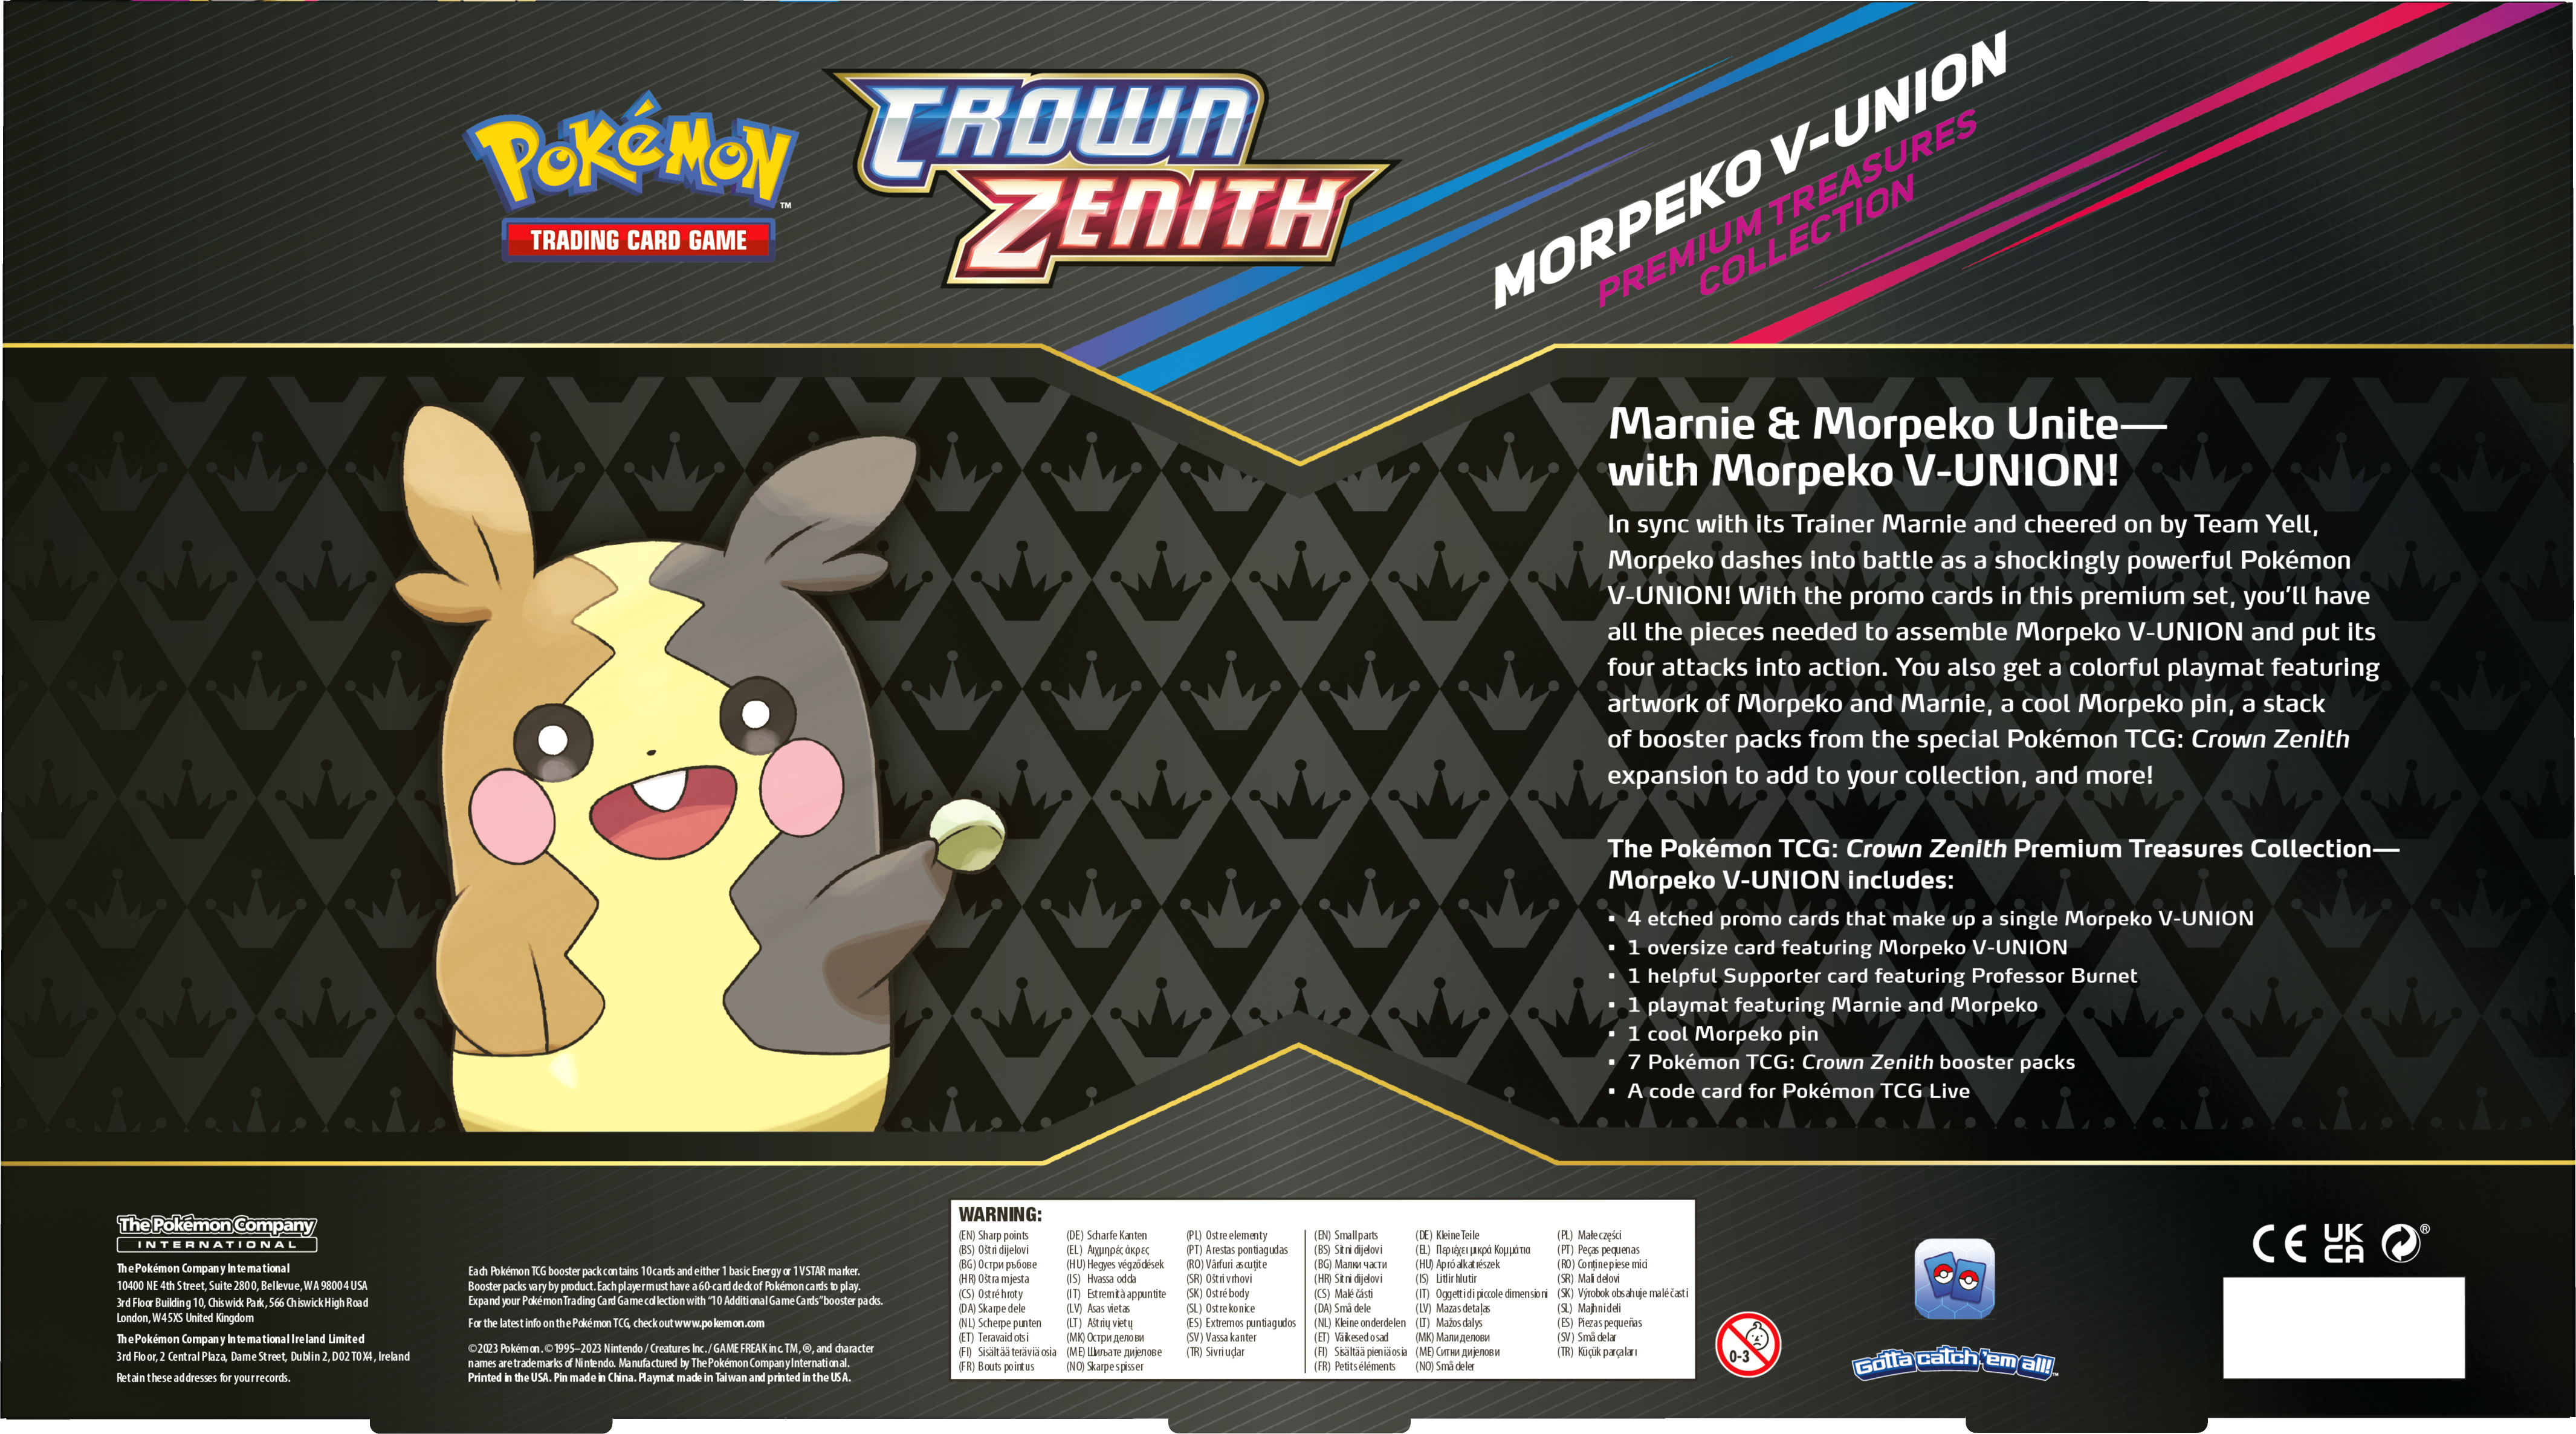 Pokémon TCG: Crown Zenith Premium Treasures Collection—Morpeko V-UNION